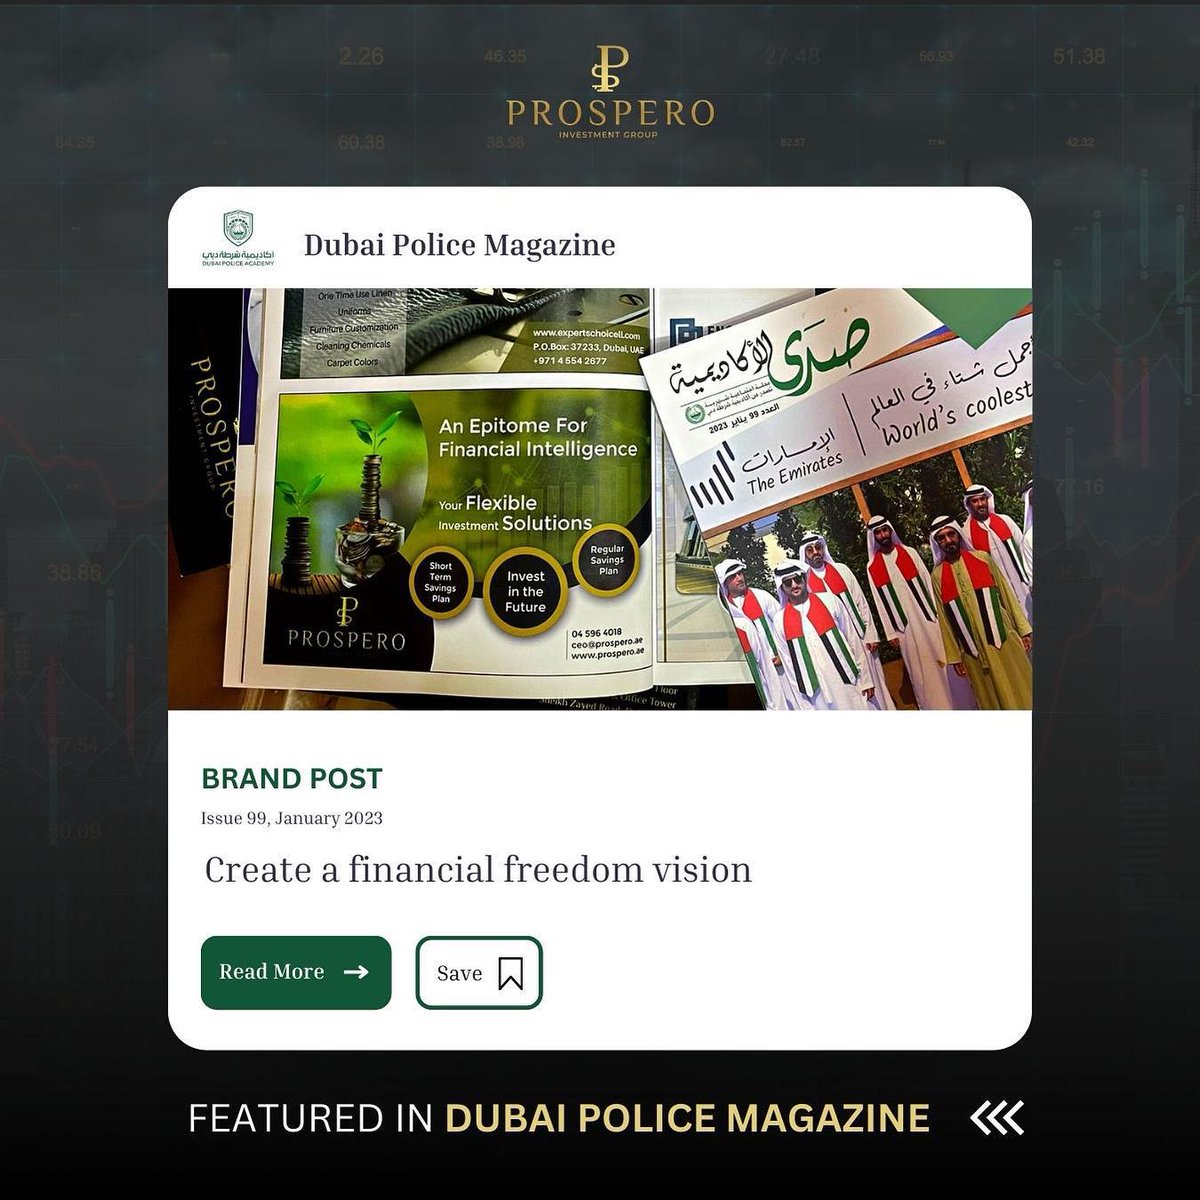 FEATURED IN DUBAI POLICE MAGAZINE…
#dubaipolice #uaepolice #magazine #investment #investmentportfolio #prospero